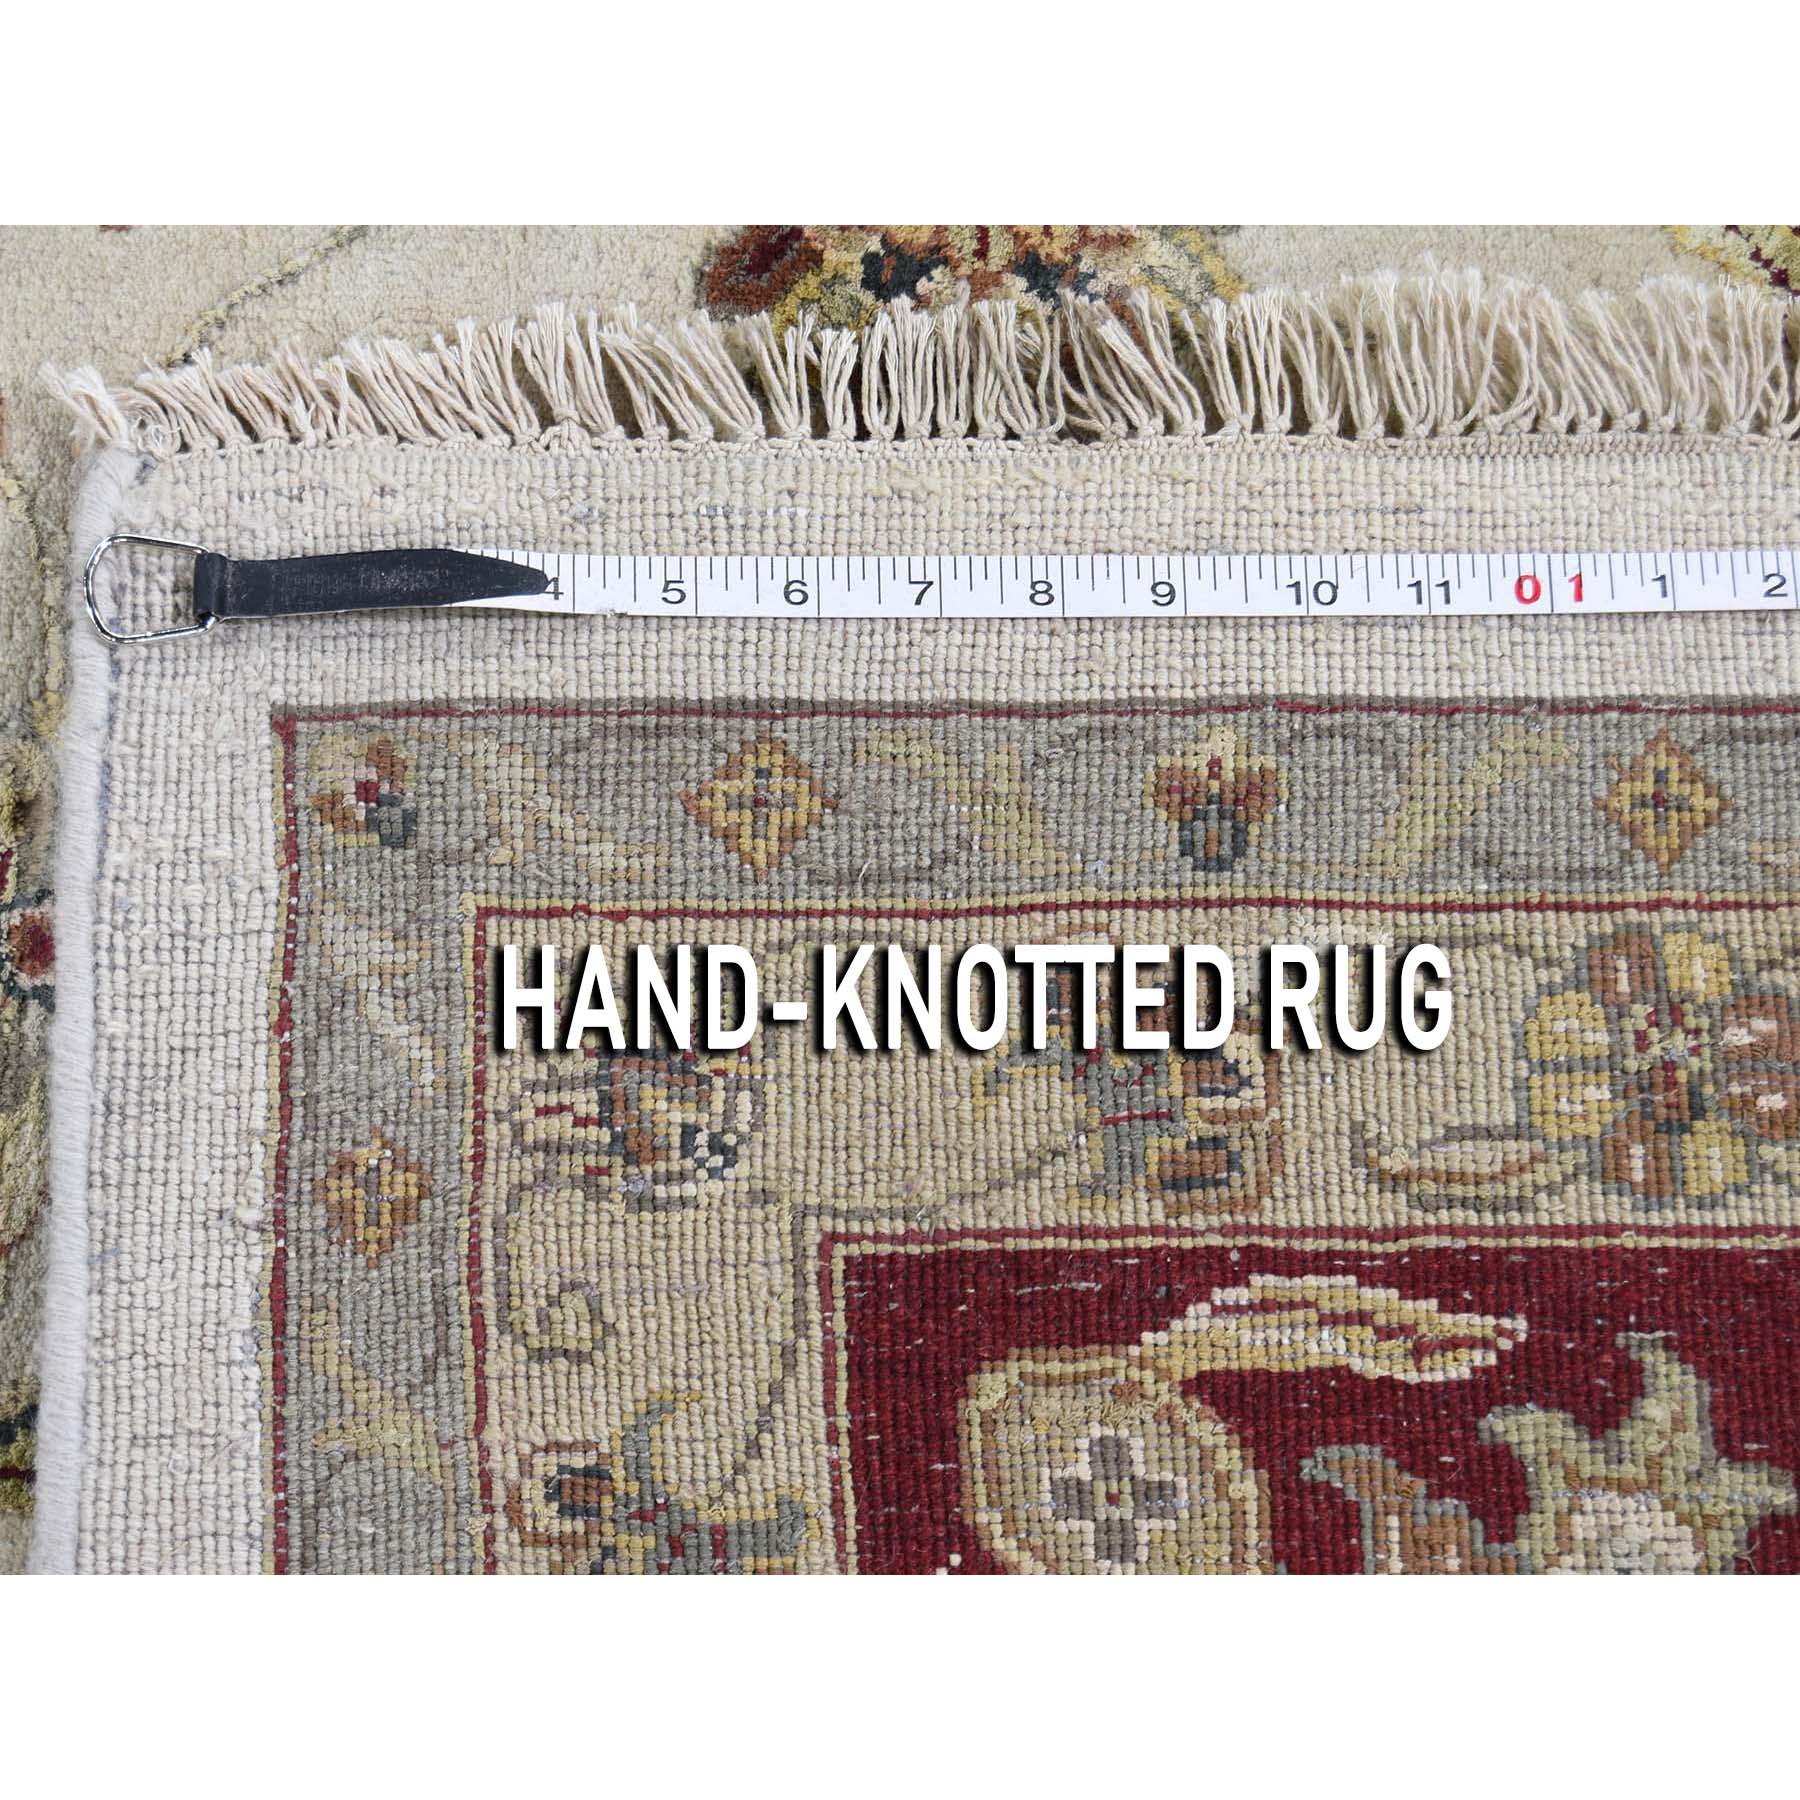 12-x18-2  Oversized Hand-Knotted Half Wool & Half Silk Rajasthan Oriental Rug 